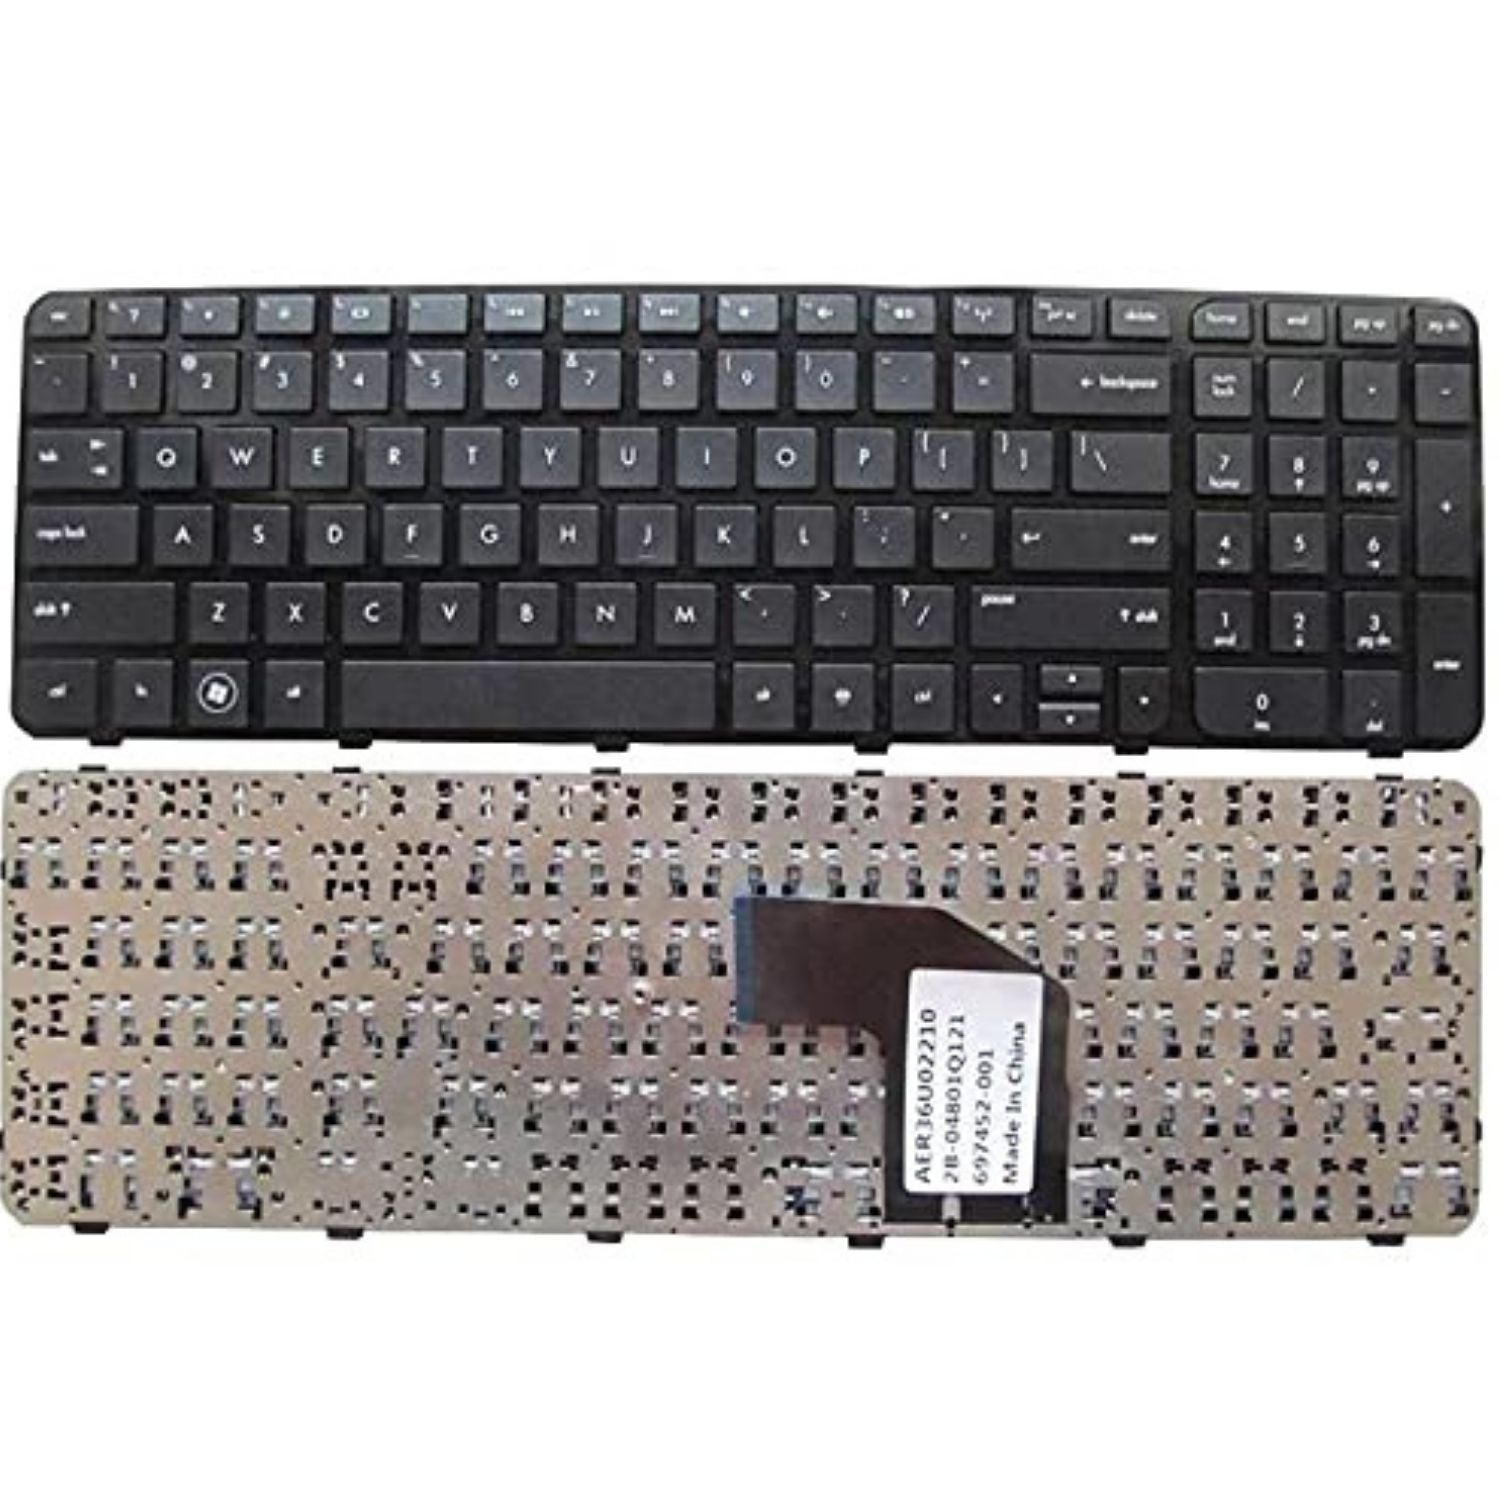 HP Laptop keyboard Pavilion G6-2000 G6-2100 G6-2200 G6-2300 G6T-2000 Series 699497-001 697452-001 700271-001 AER36U02310 (Black) with